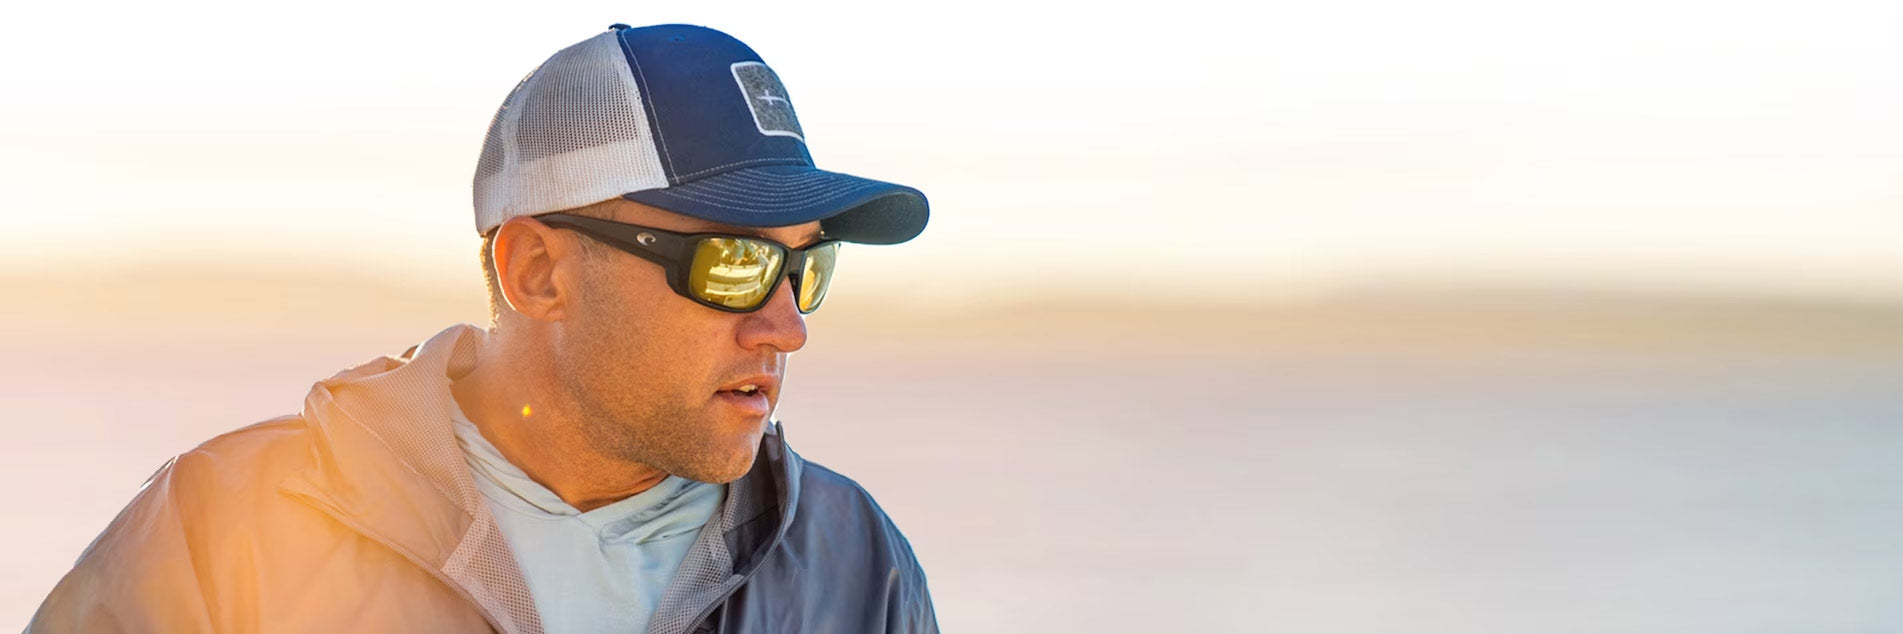 Costa Fishing Sunglasses